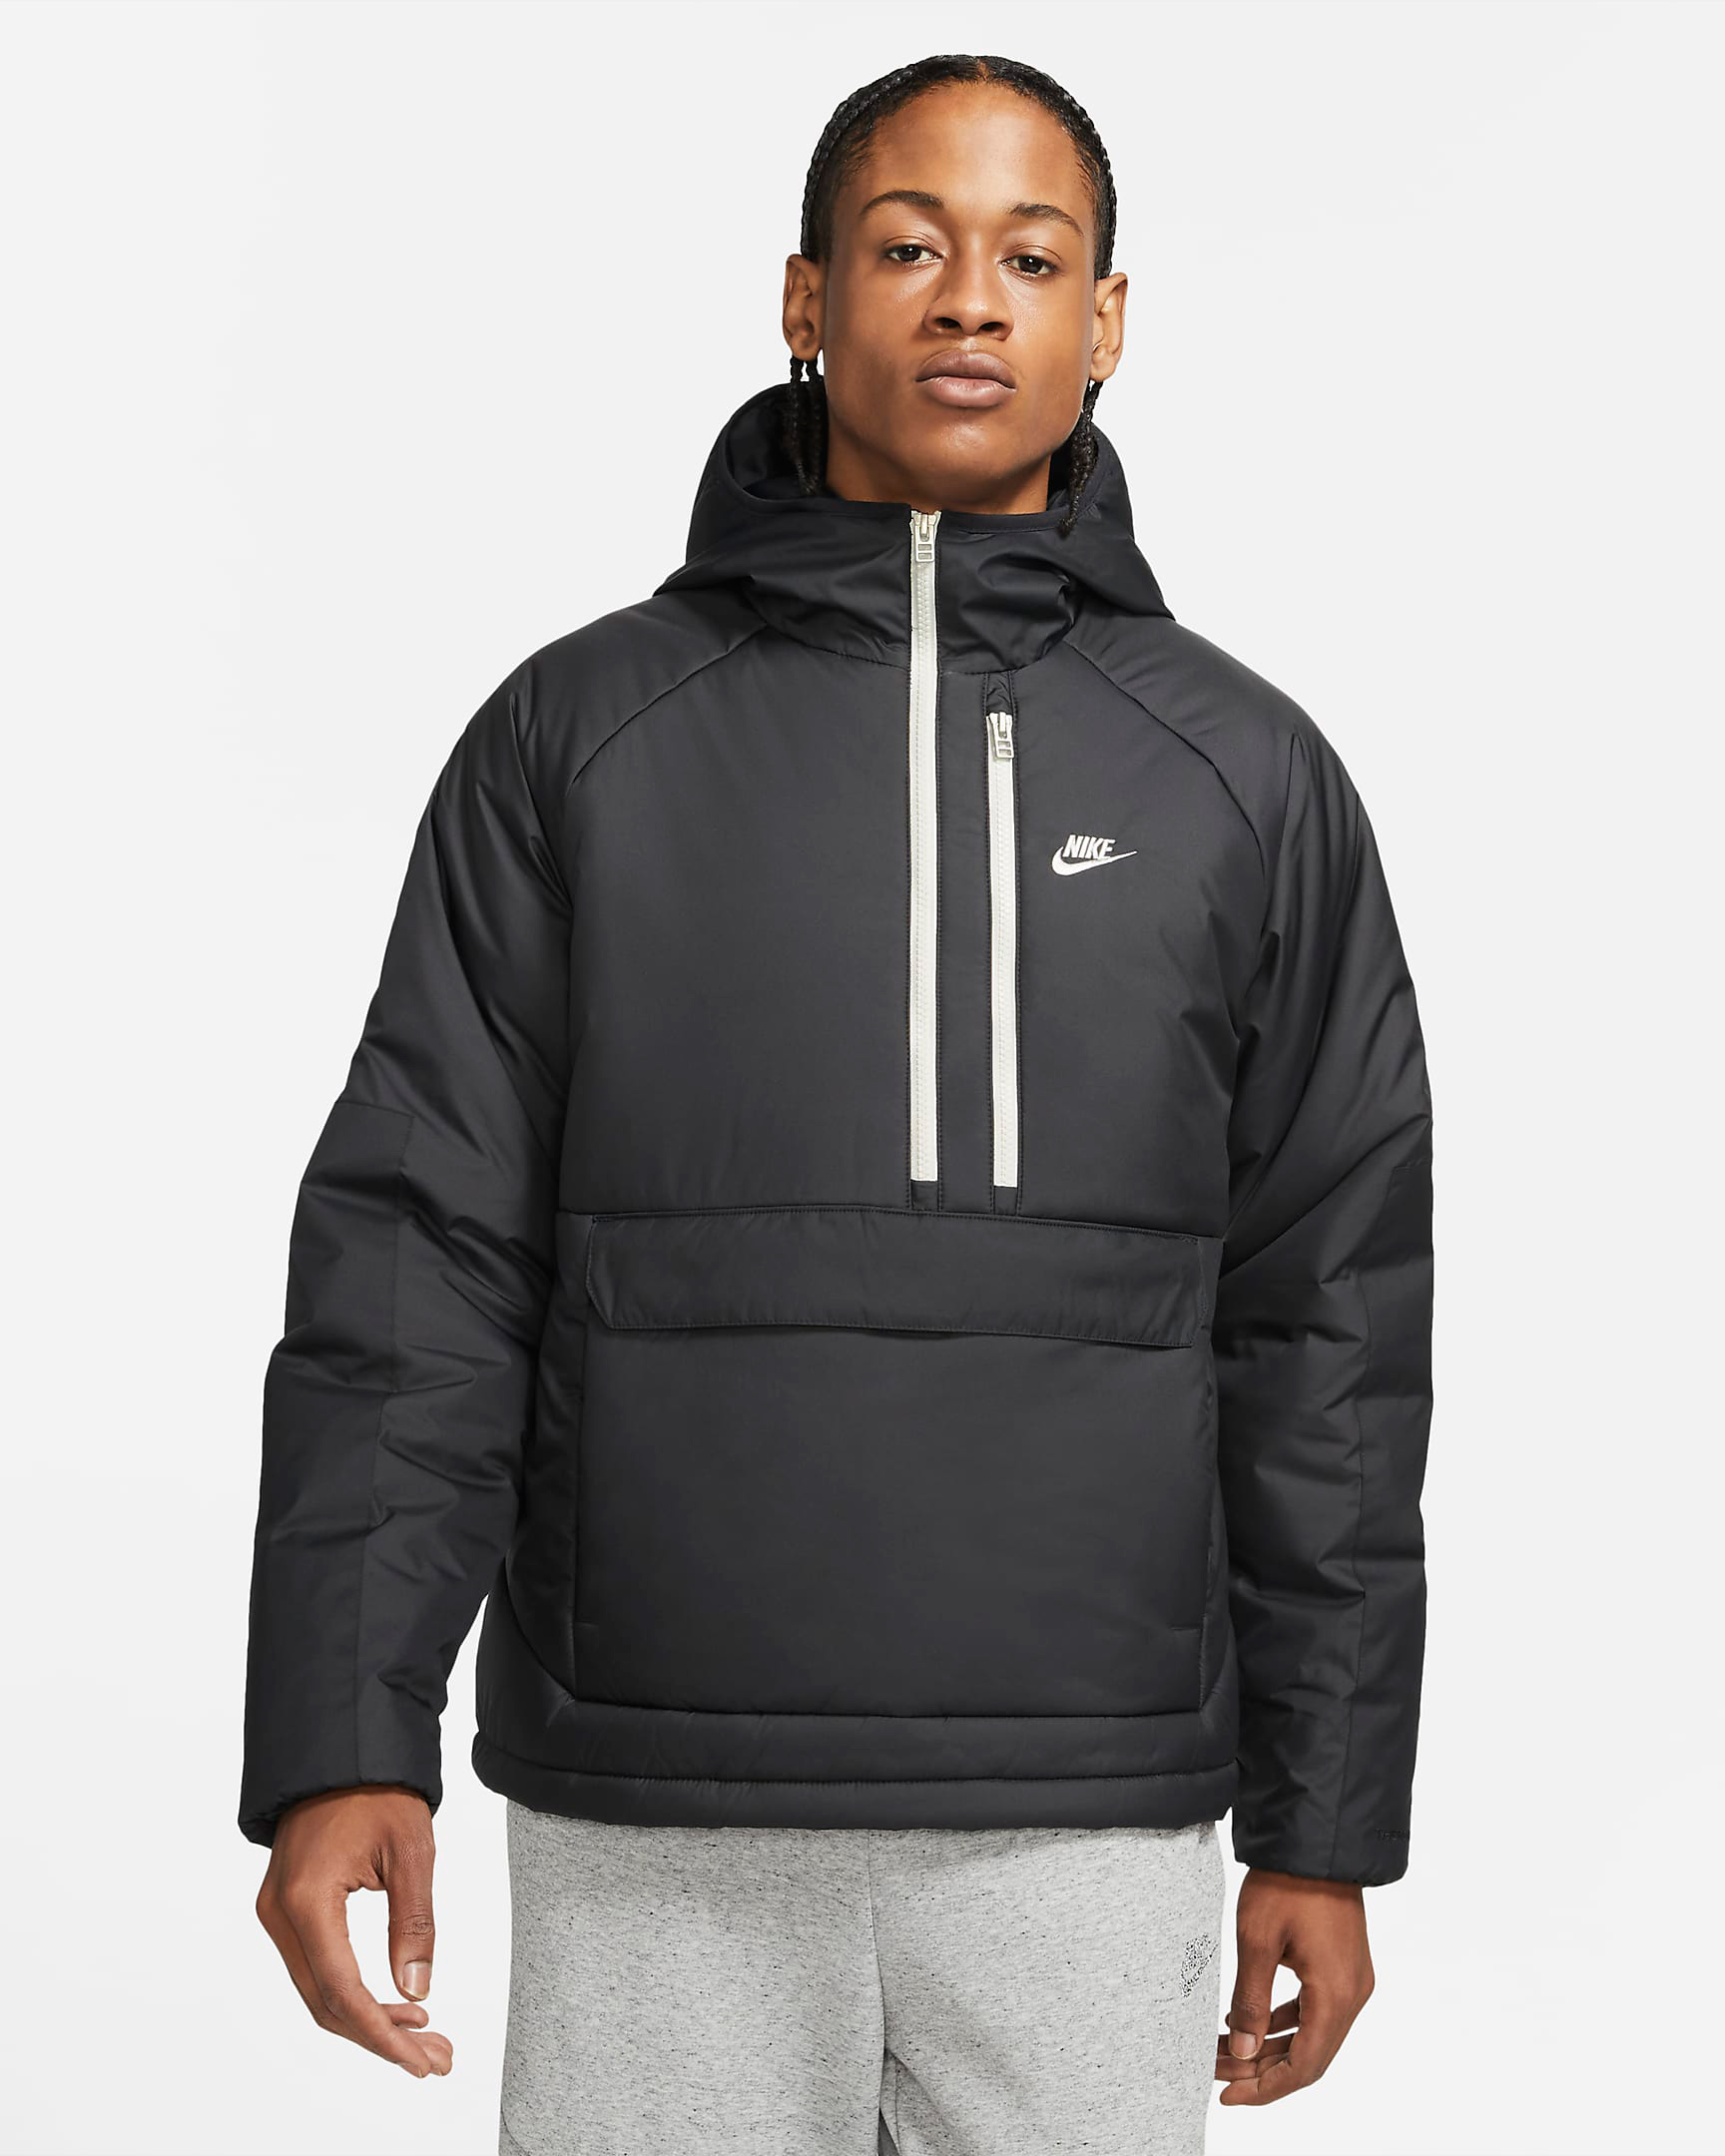 nike-sportswear-therma-fit-legacy-hooded-anorak-jacket-black-sail